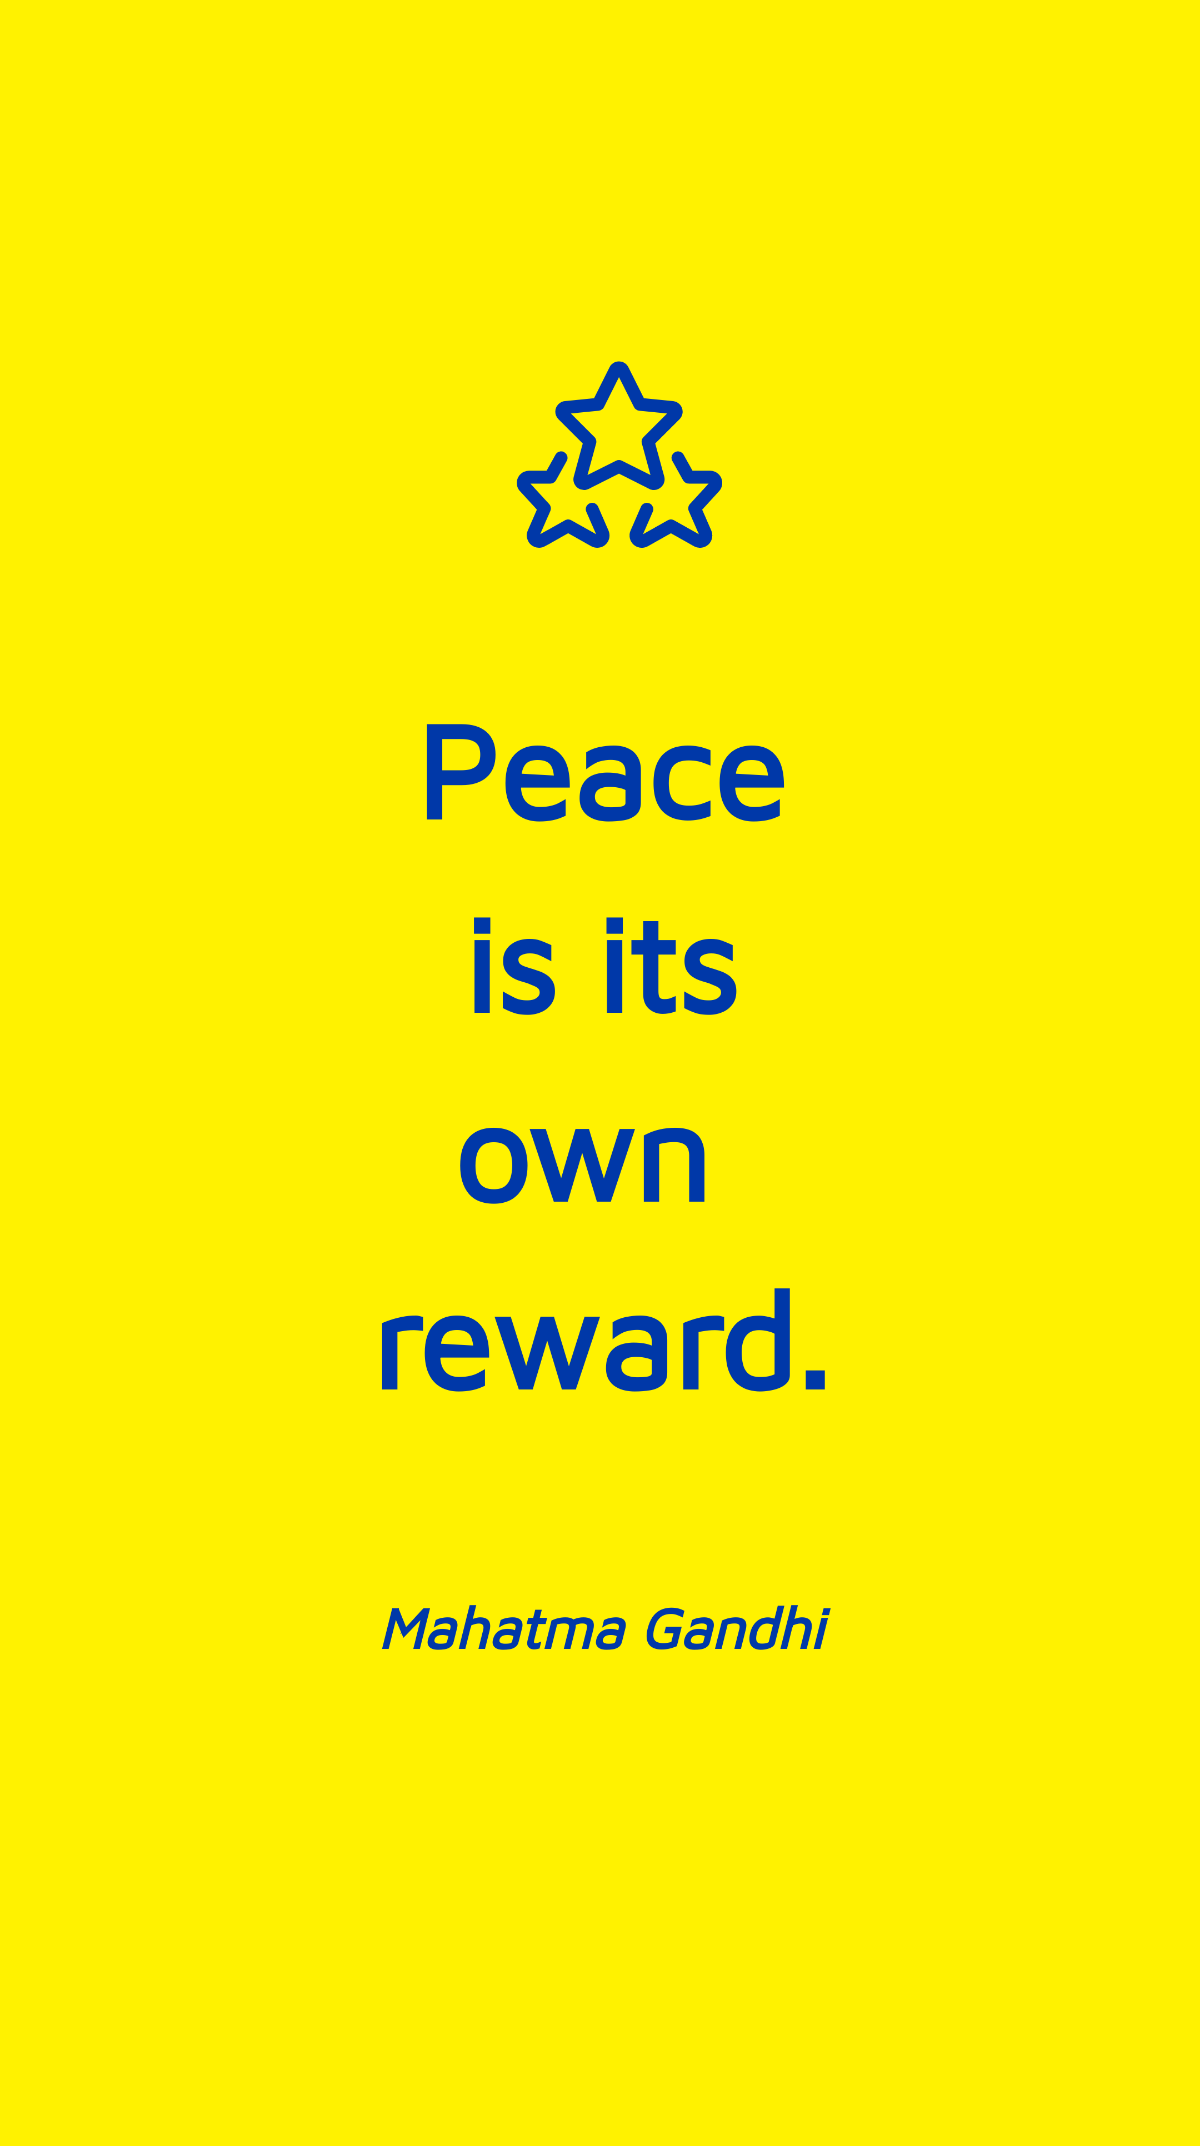 Mahatma Gandhi - Peace is its own reward. Template